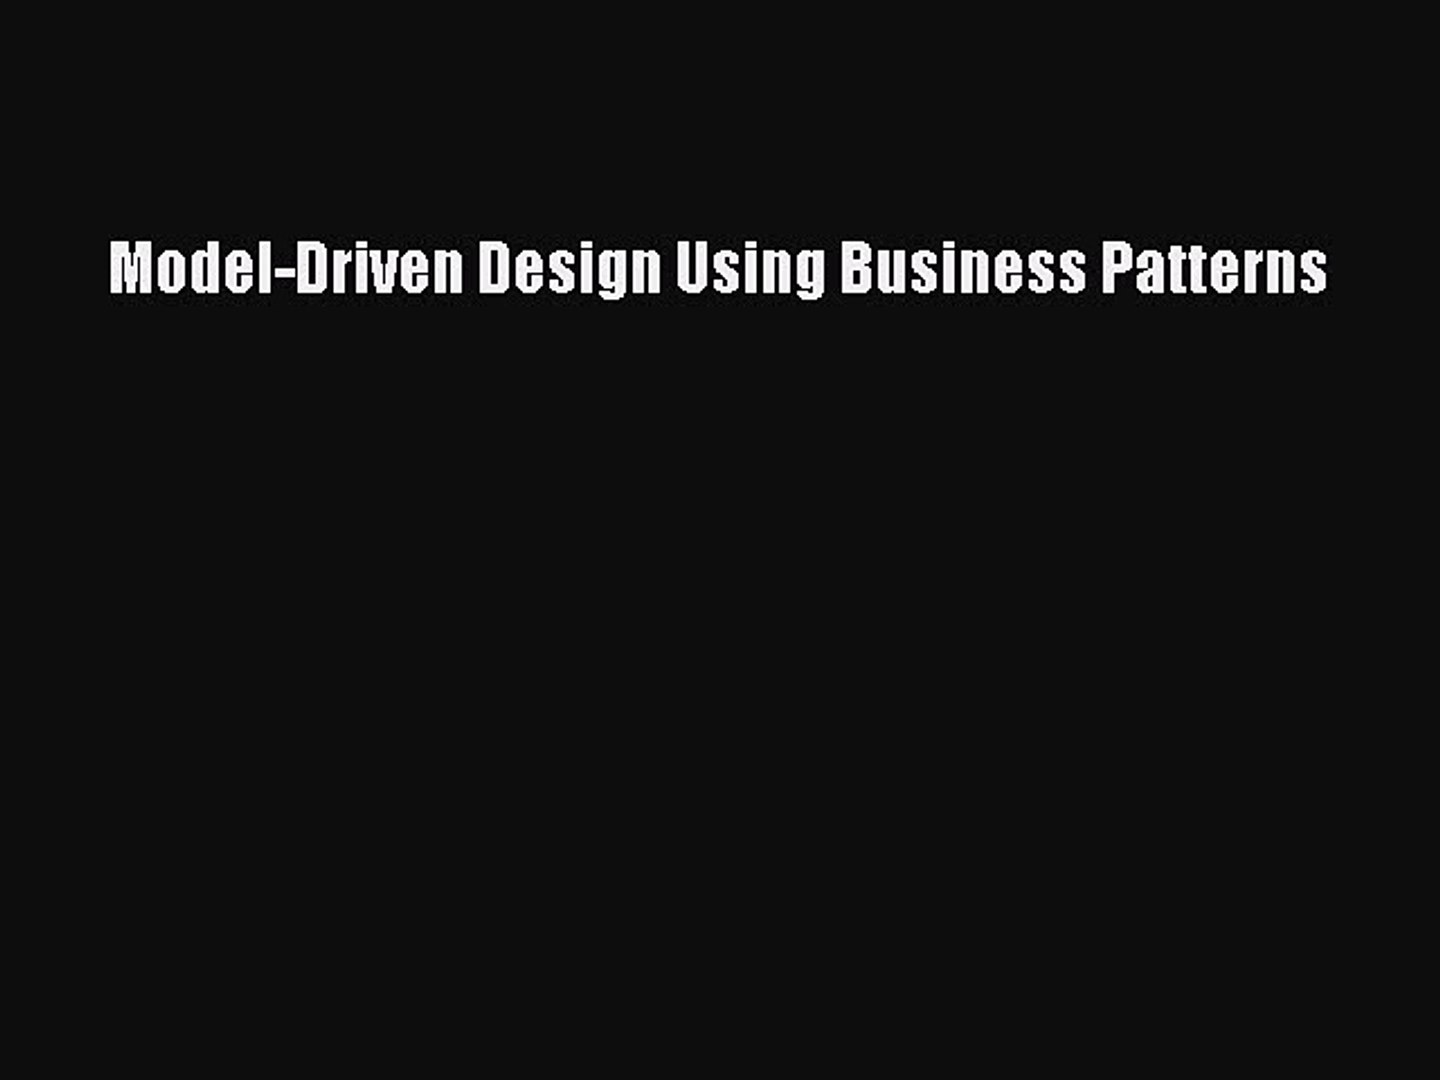 [Read book] Model-Driven Design Using Business Patterns [PDF] Online